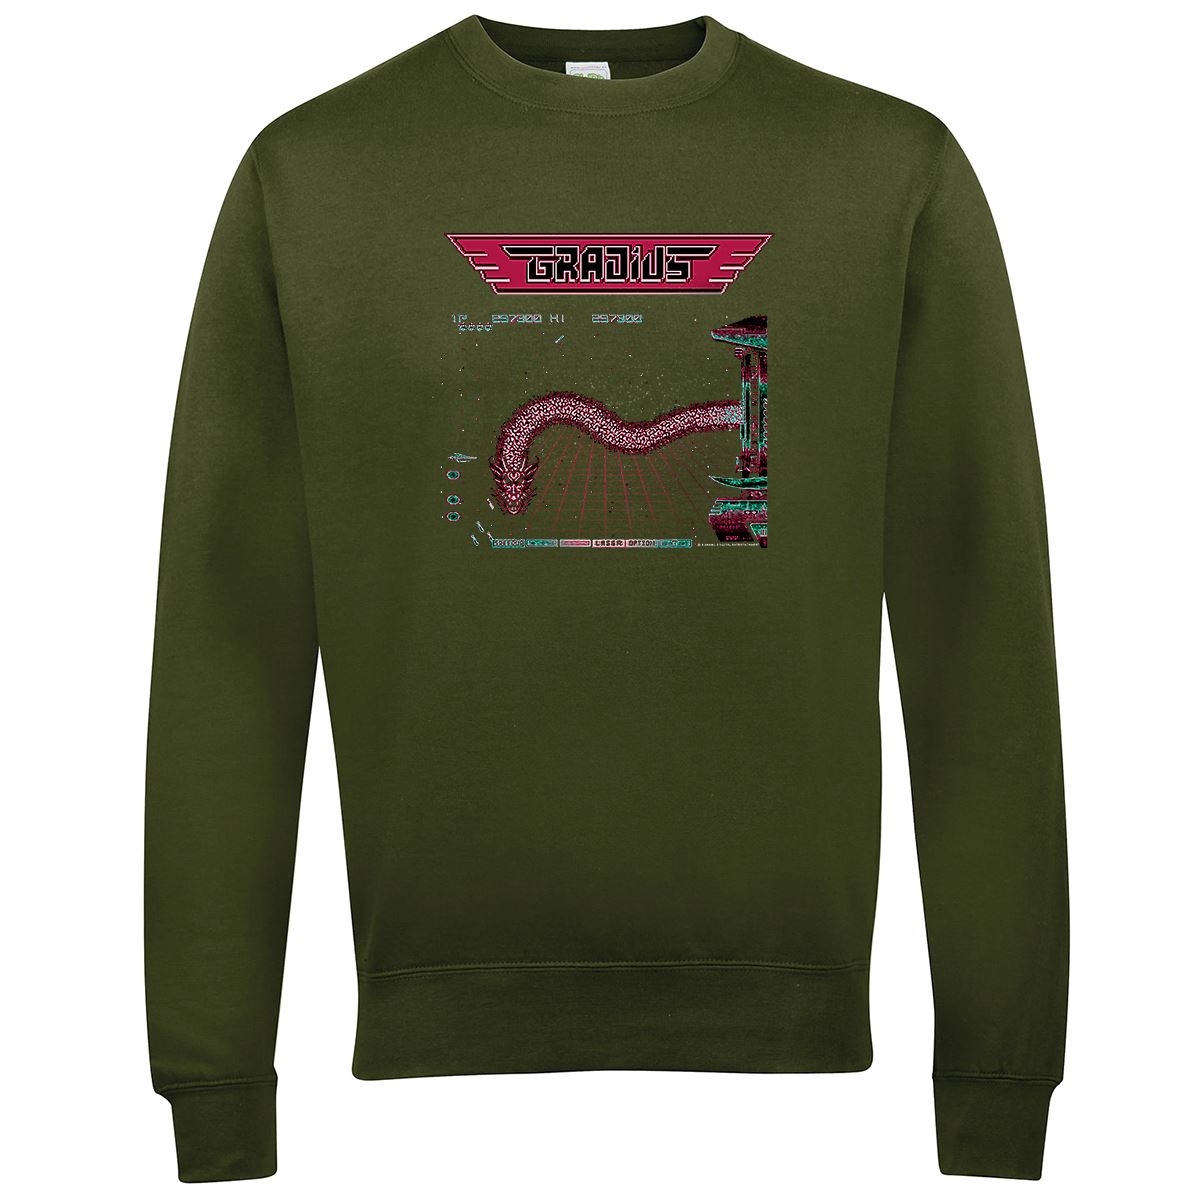 Gradius Retro Gaming Sweatshirt Sweatshirt Seven Squared Small Olive Green 